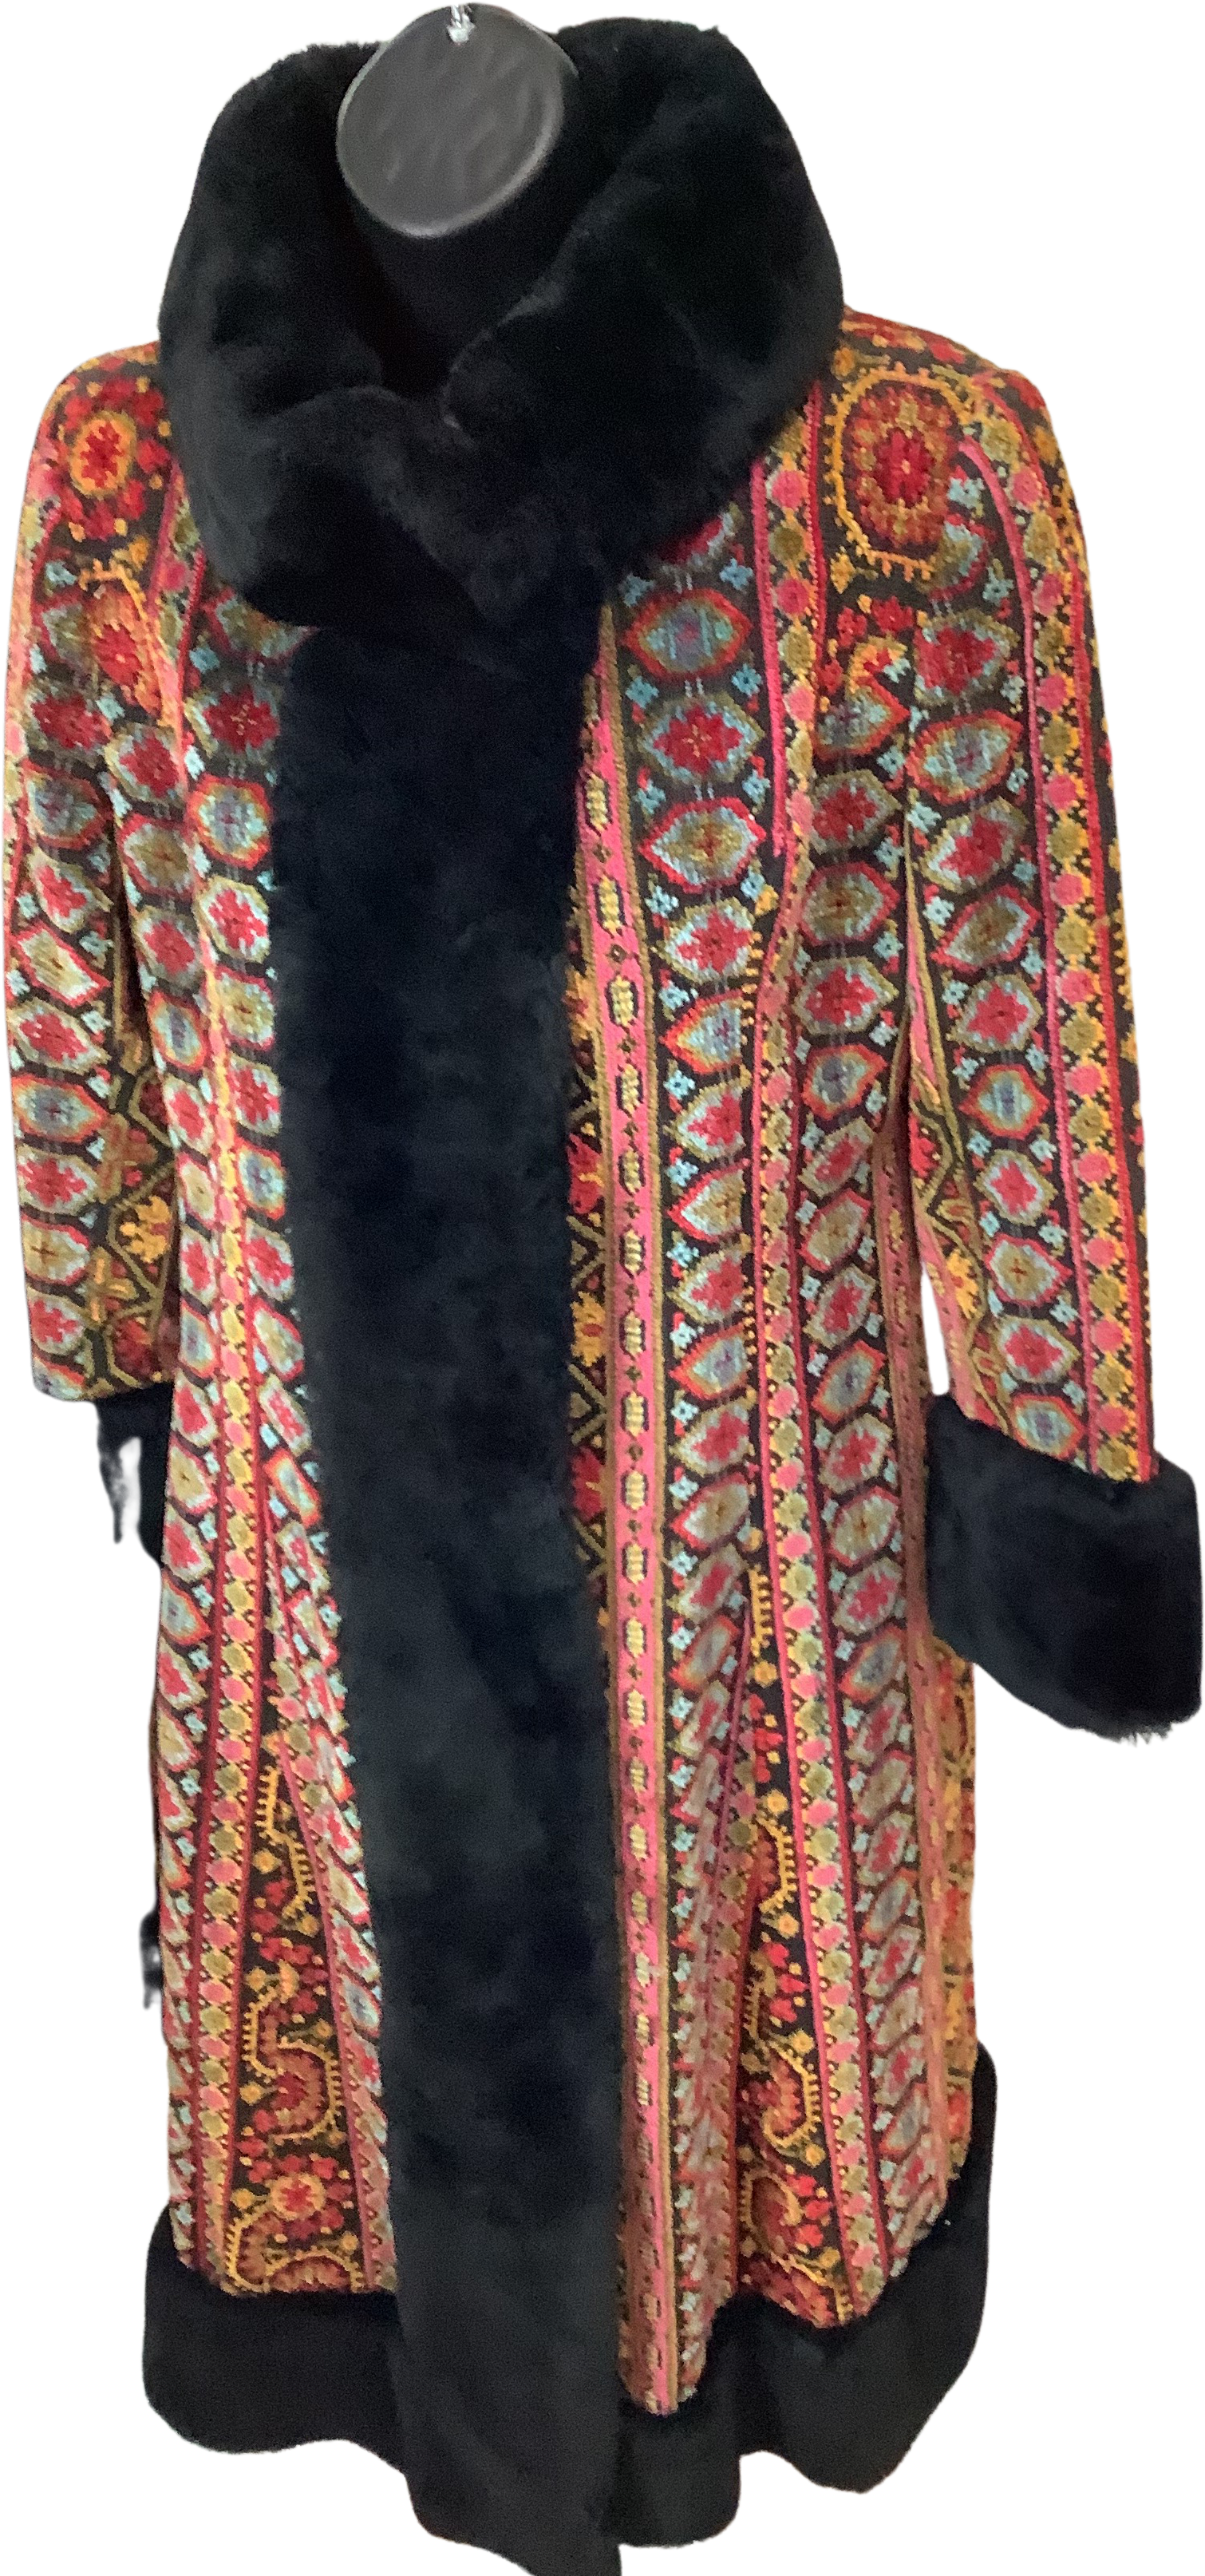 New in the shop: *SOLD* Terrific #1970s men's tapestry coat